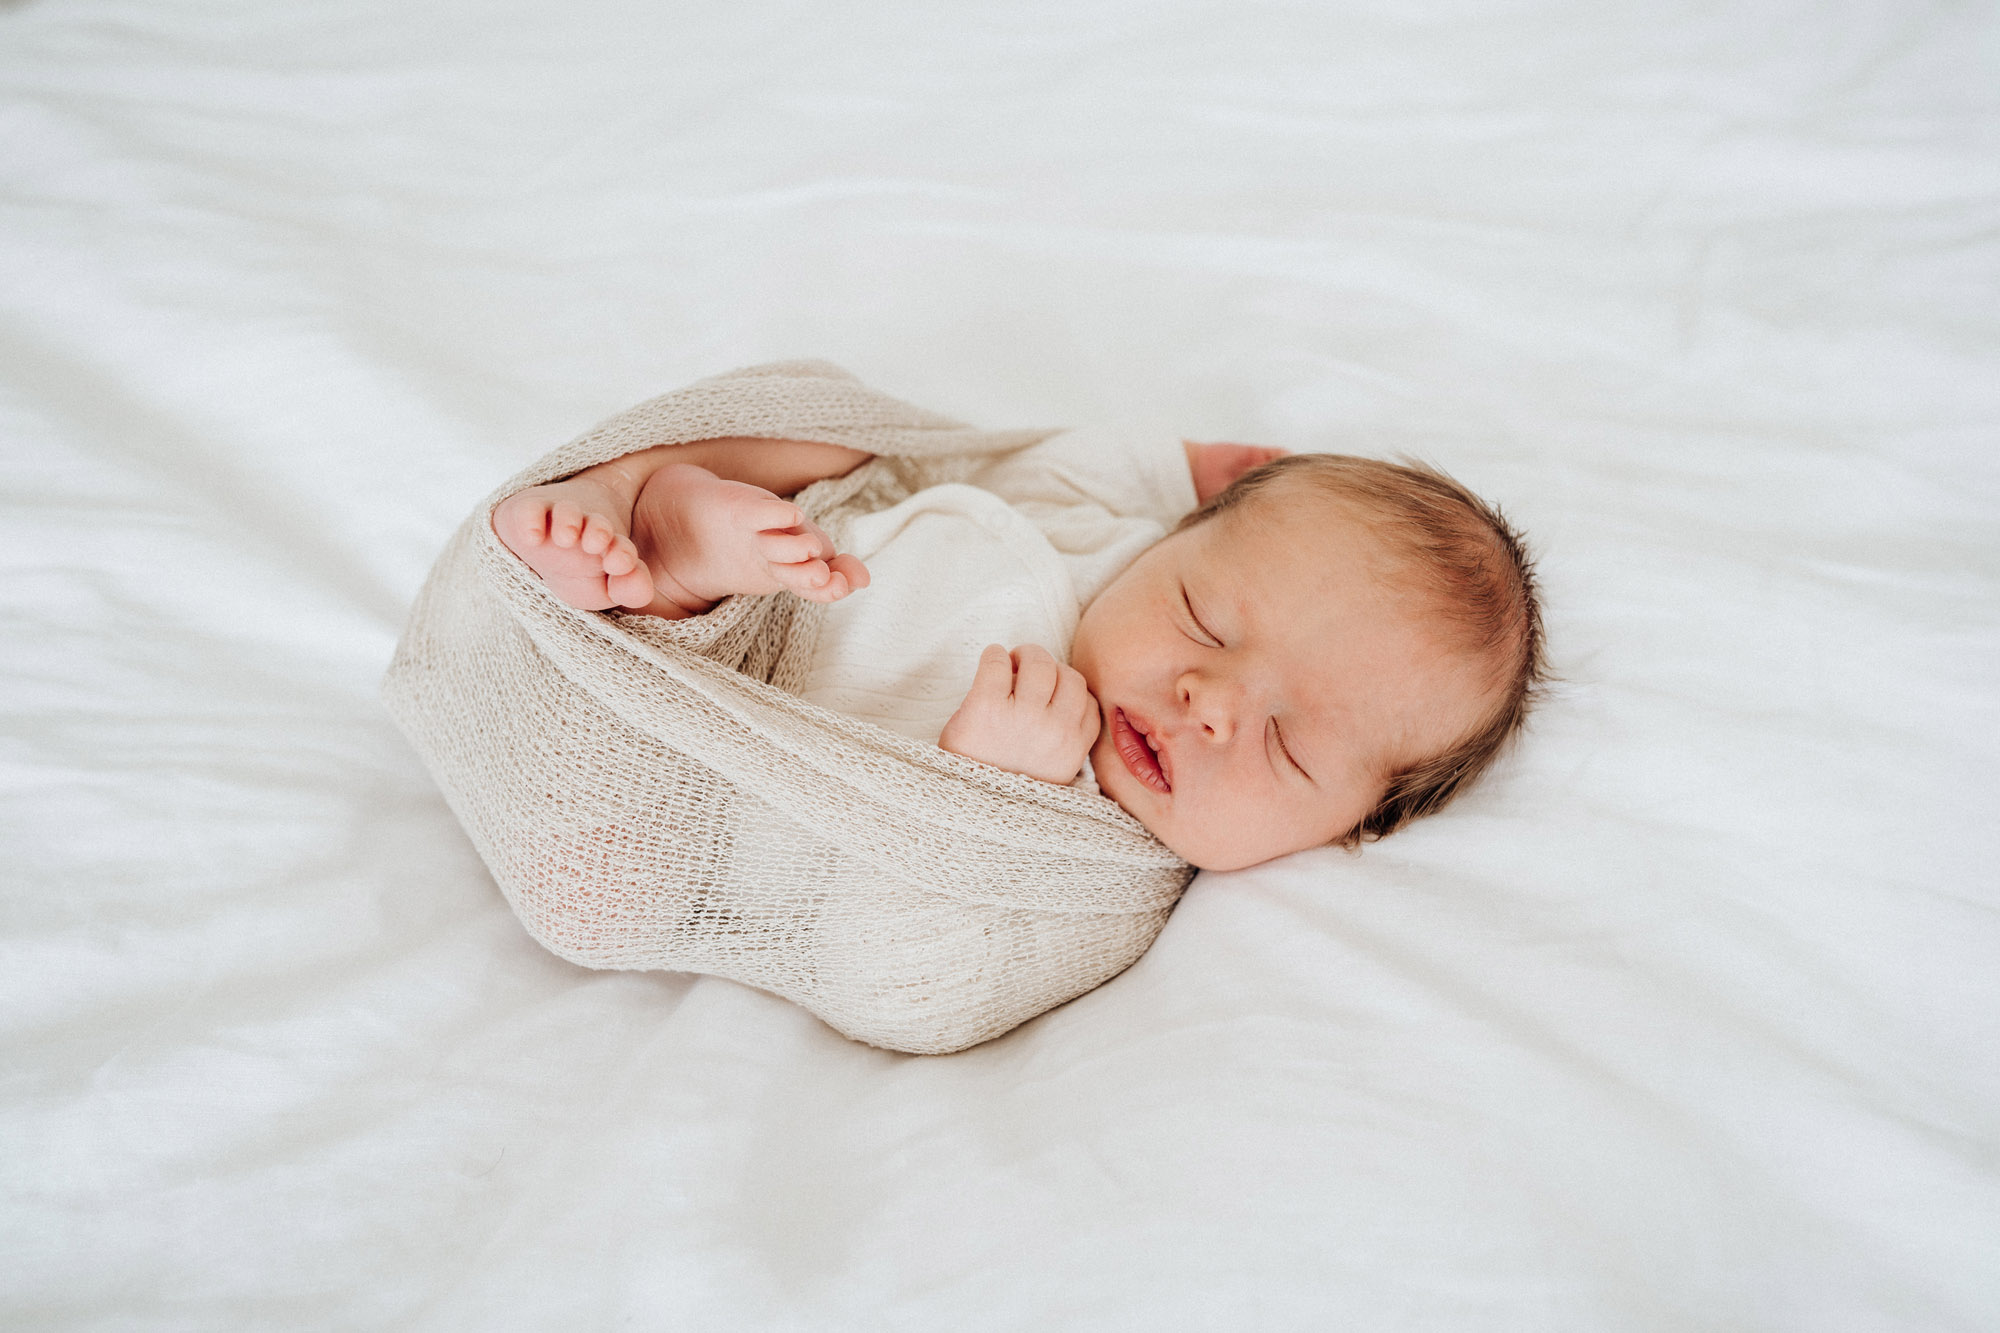 Newborn Photography with Photographer Jess Burges. Based in Kerikeri, Northland